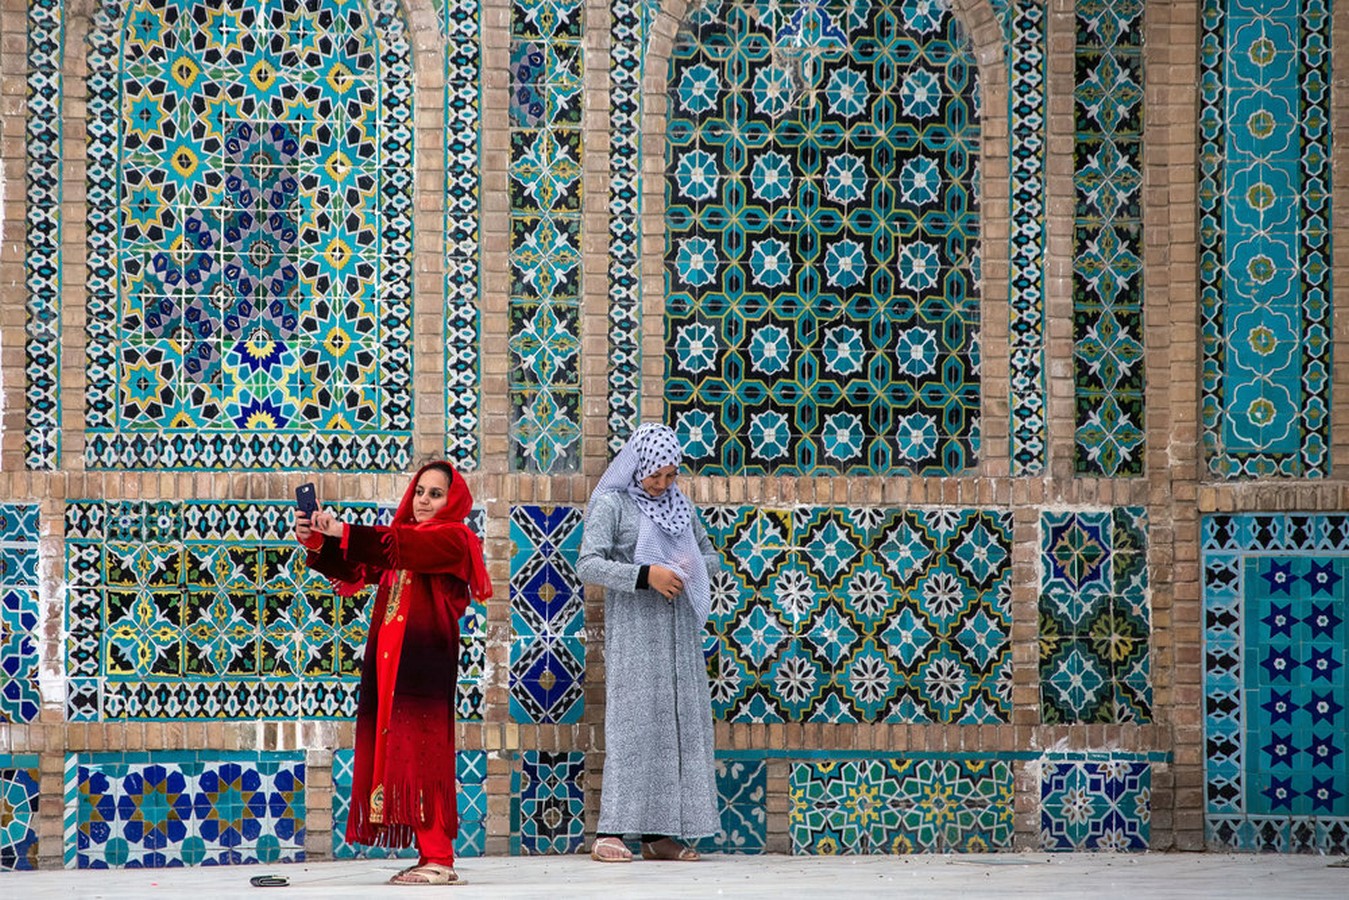 Mazar-i-Sharif Mosque, Afghanistan - Sheet2